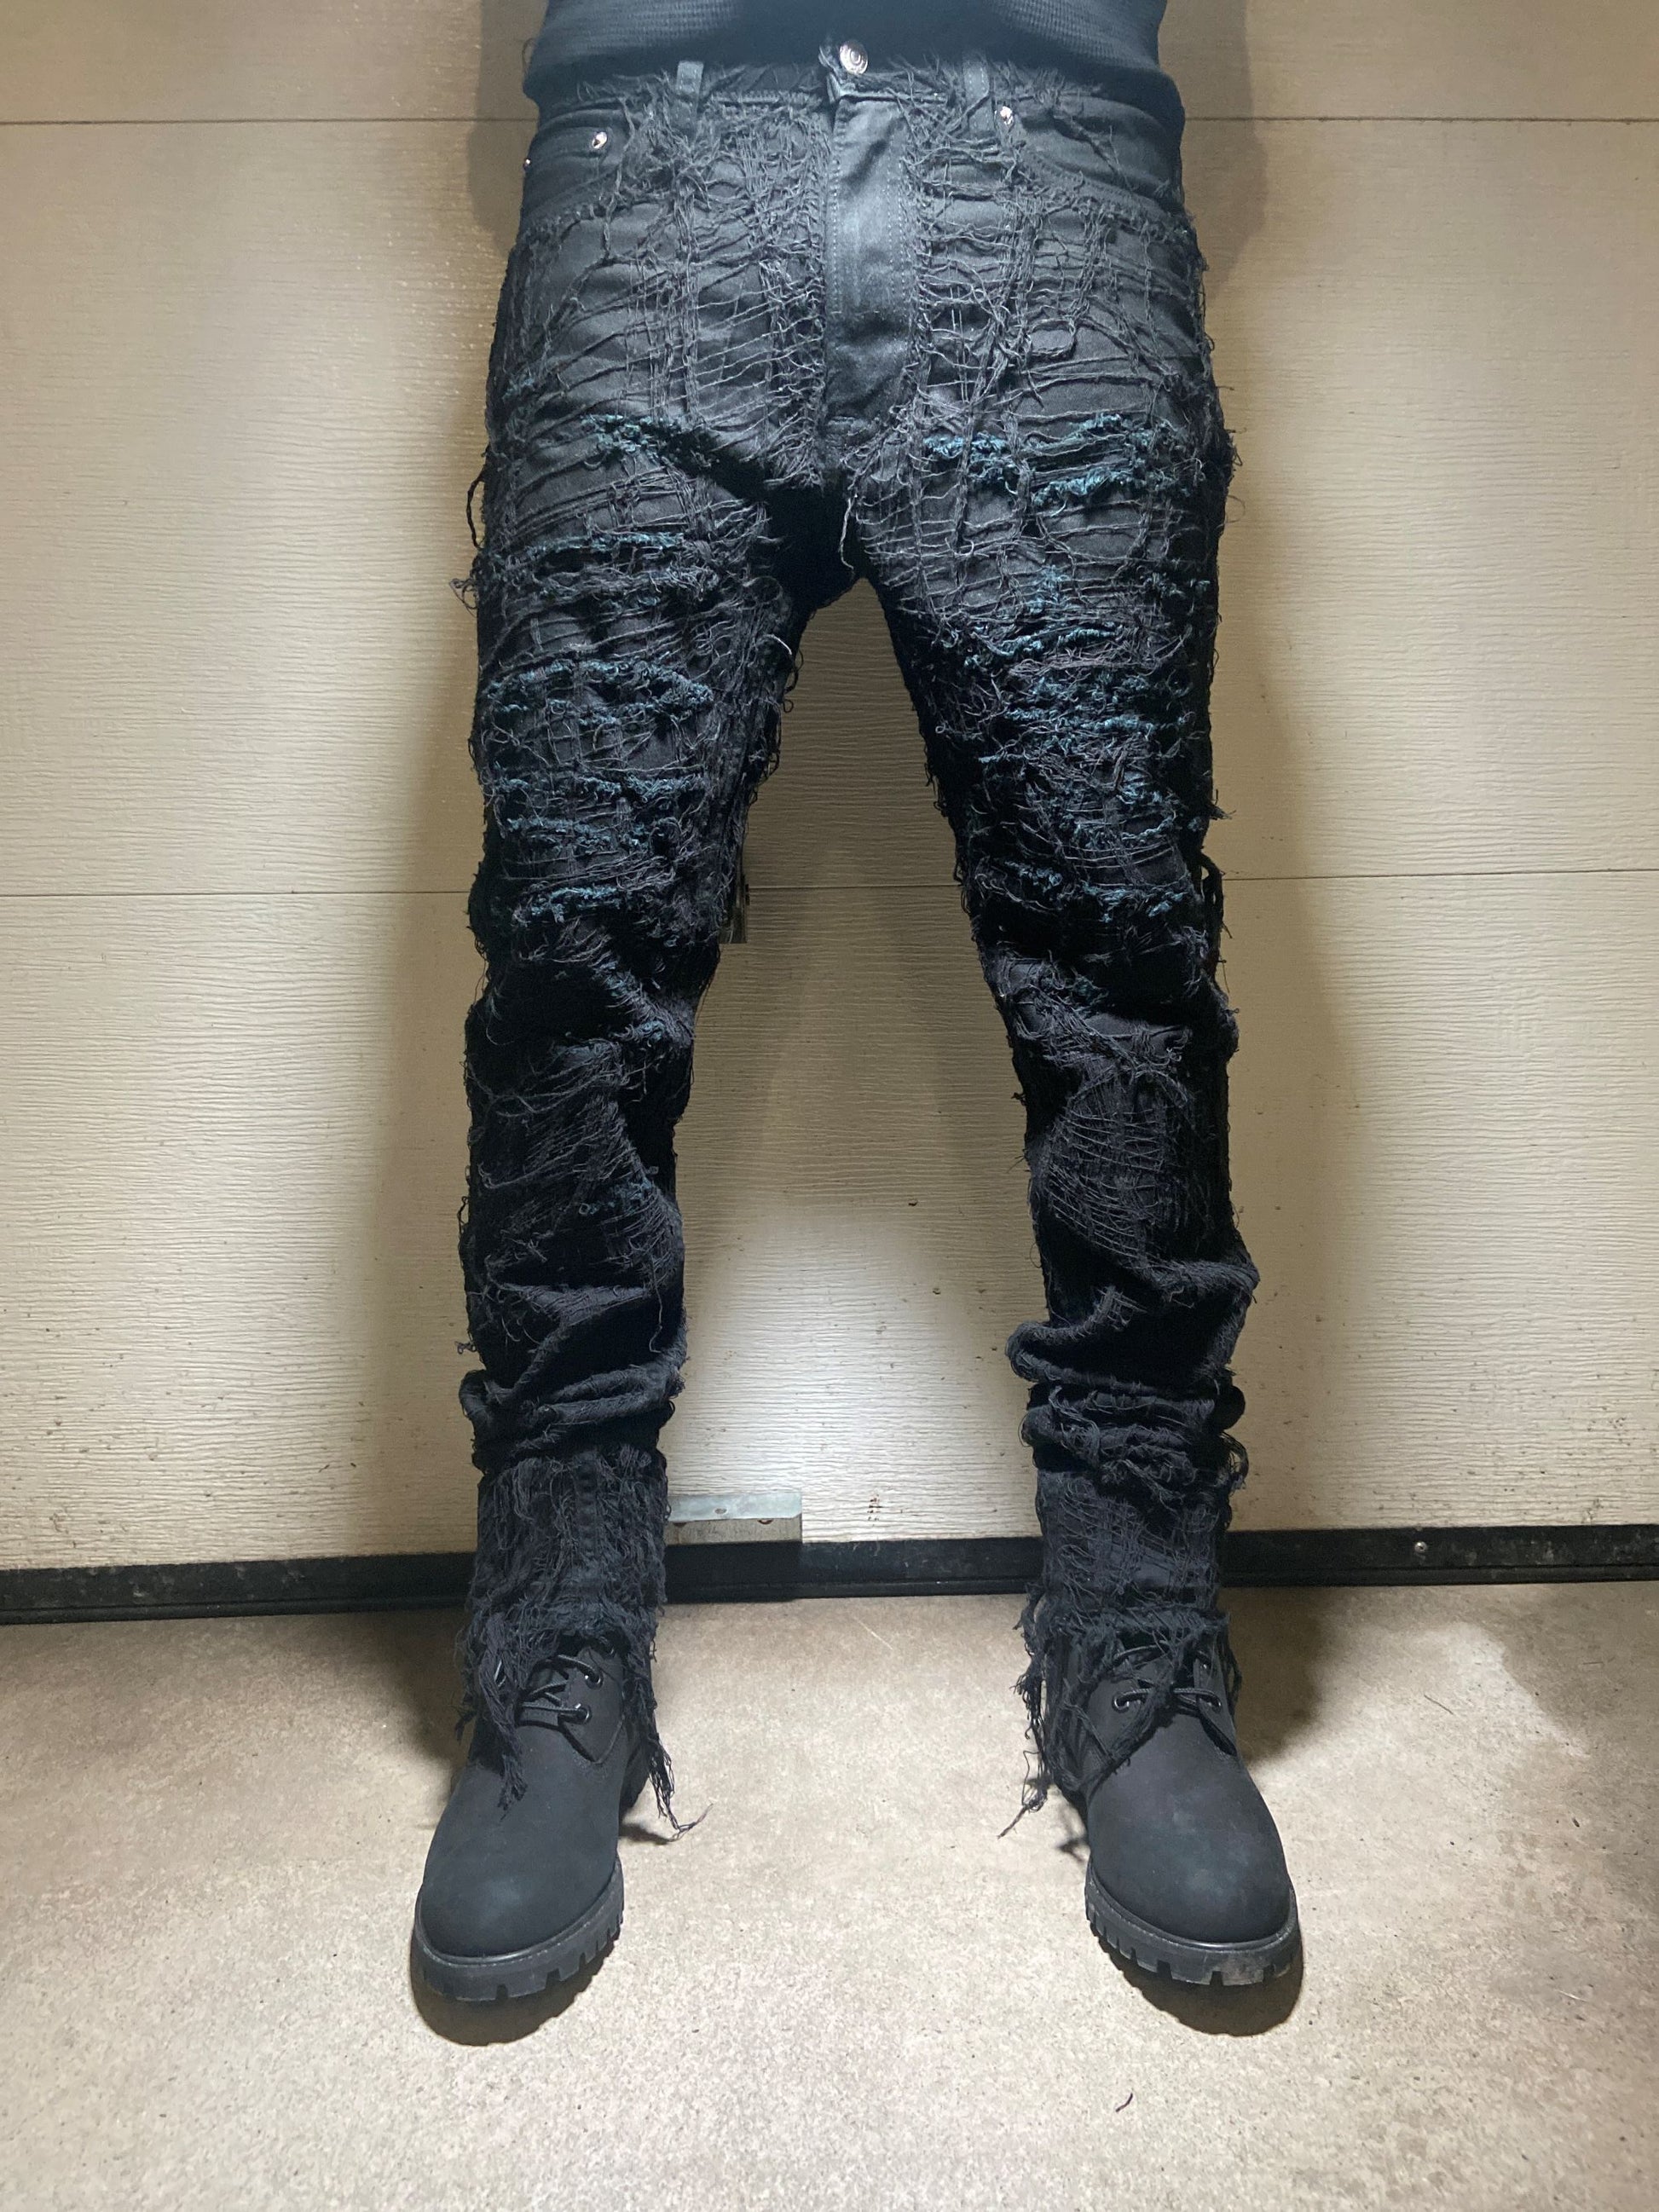 Cobweb pants. Cobweb-patterned pants. Handmade pants. Distressed jeans.